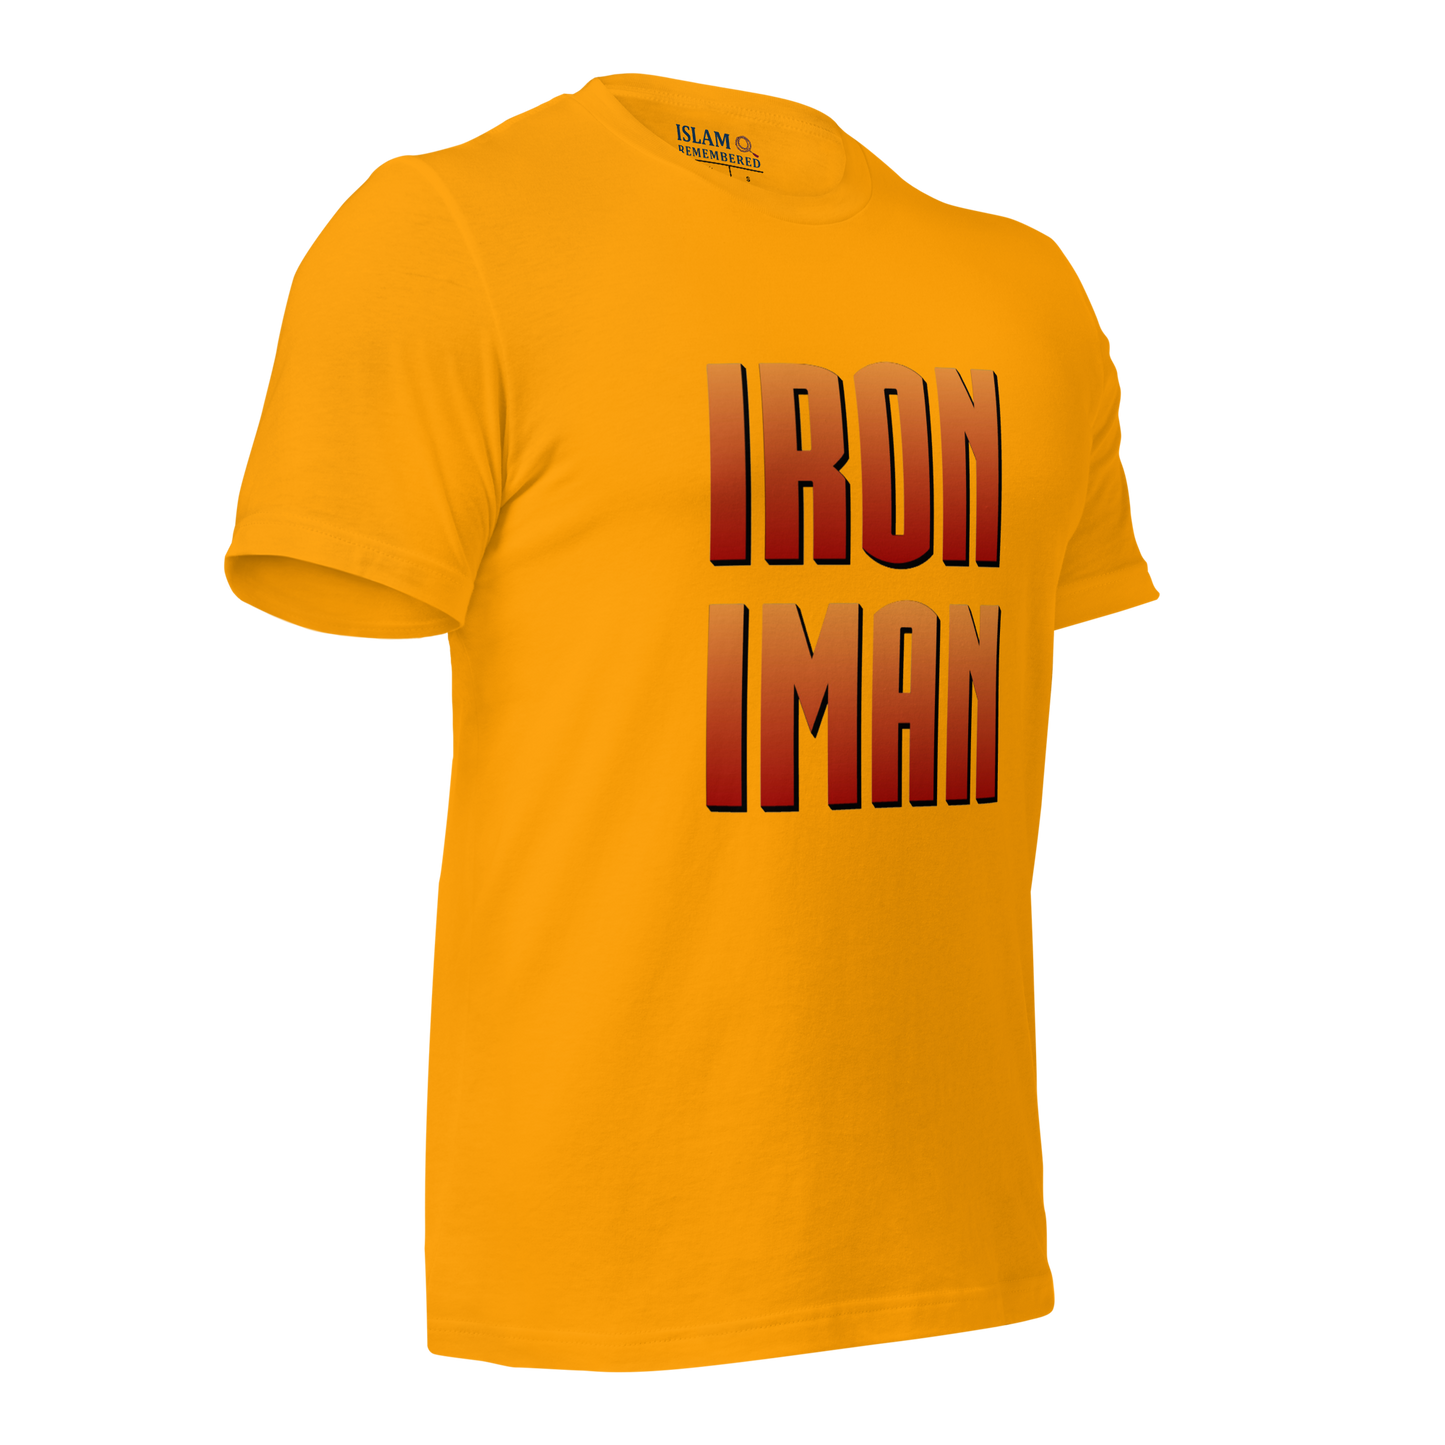 ADULT T-Shirt - IRON IMAN - Large